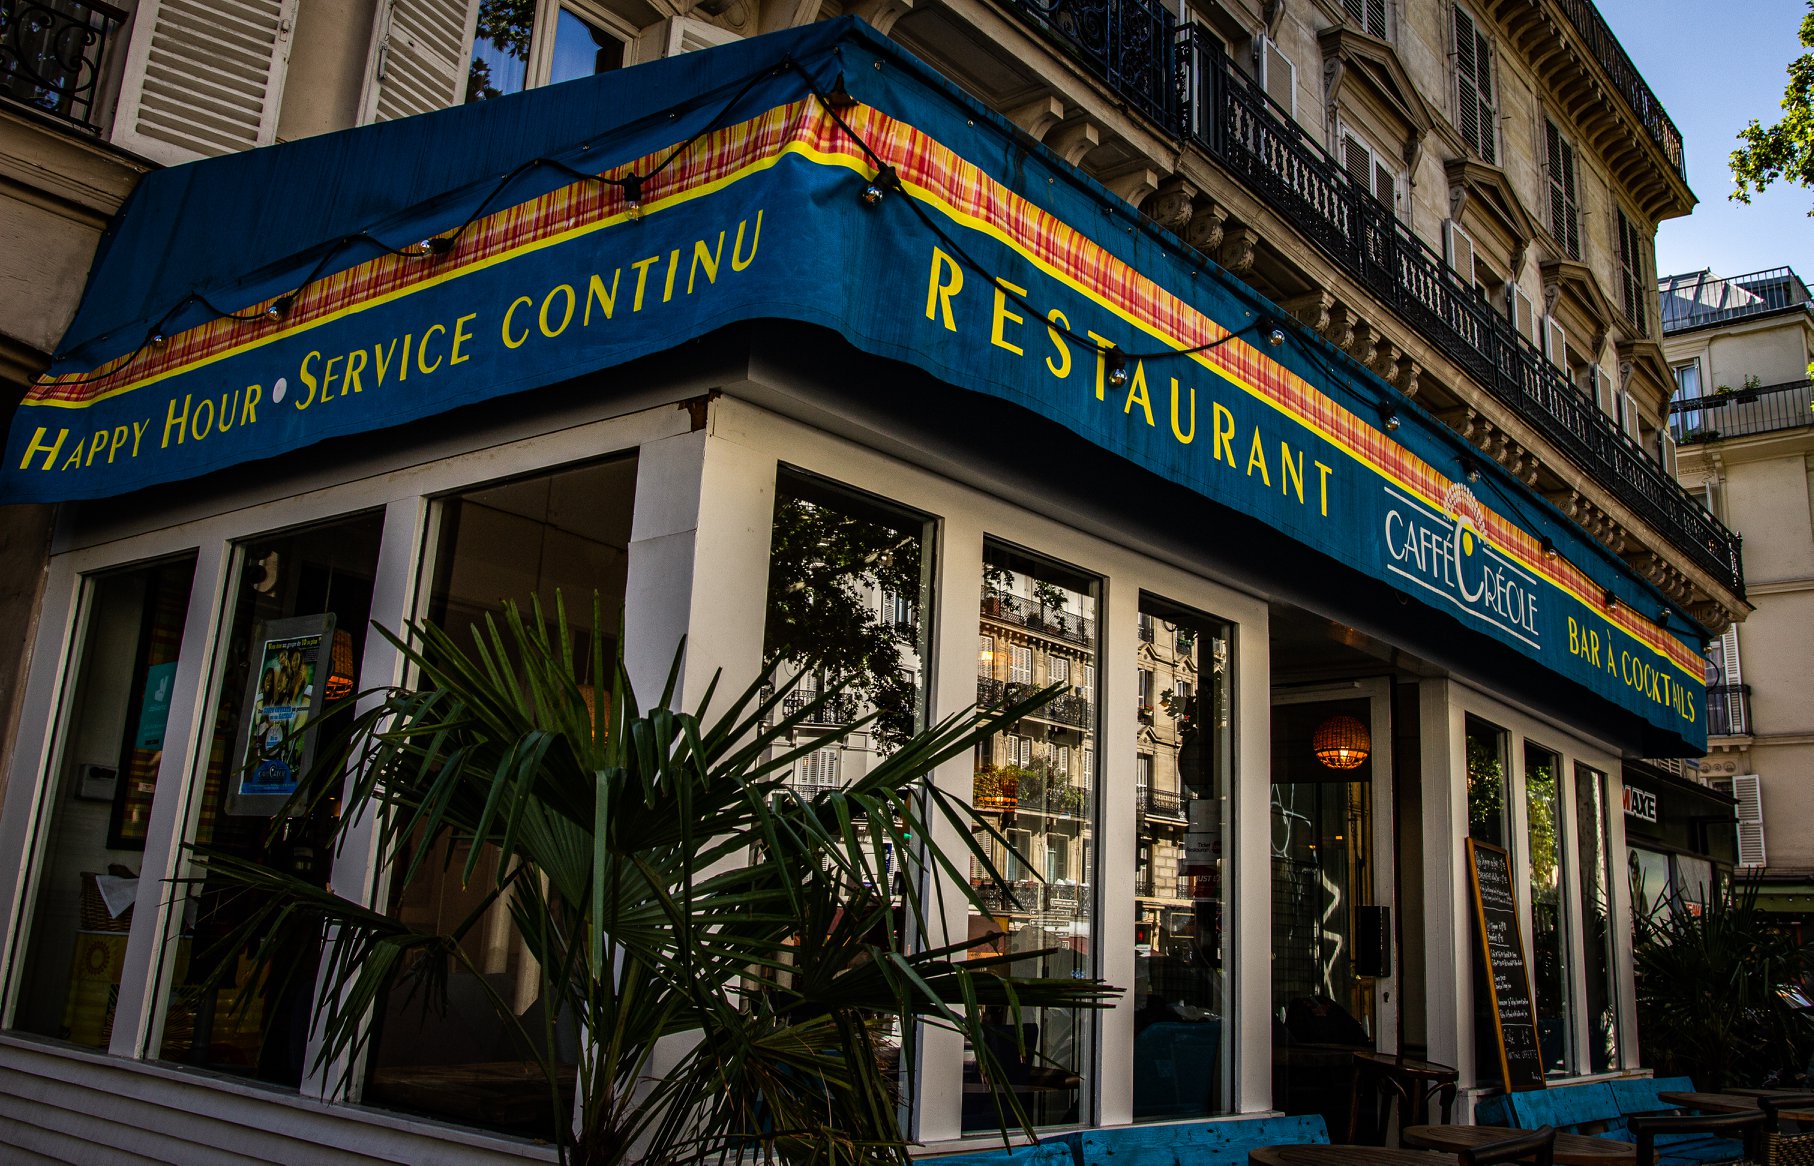 Le Caffe Creole Restaurant Antillais Paris Bastille Caffe Creole